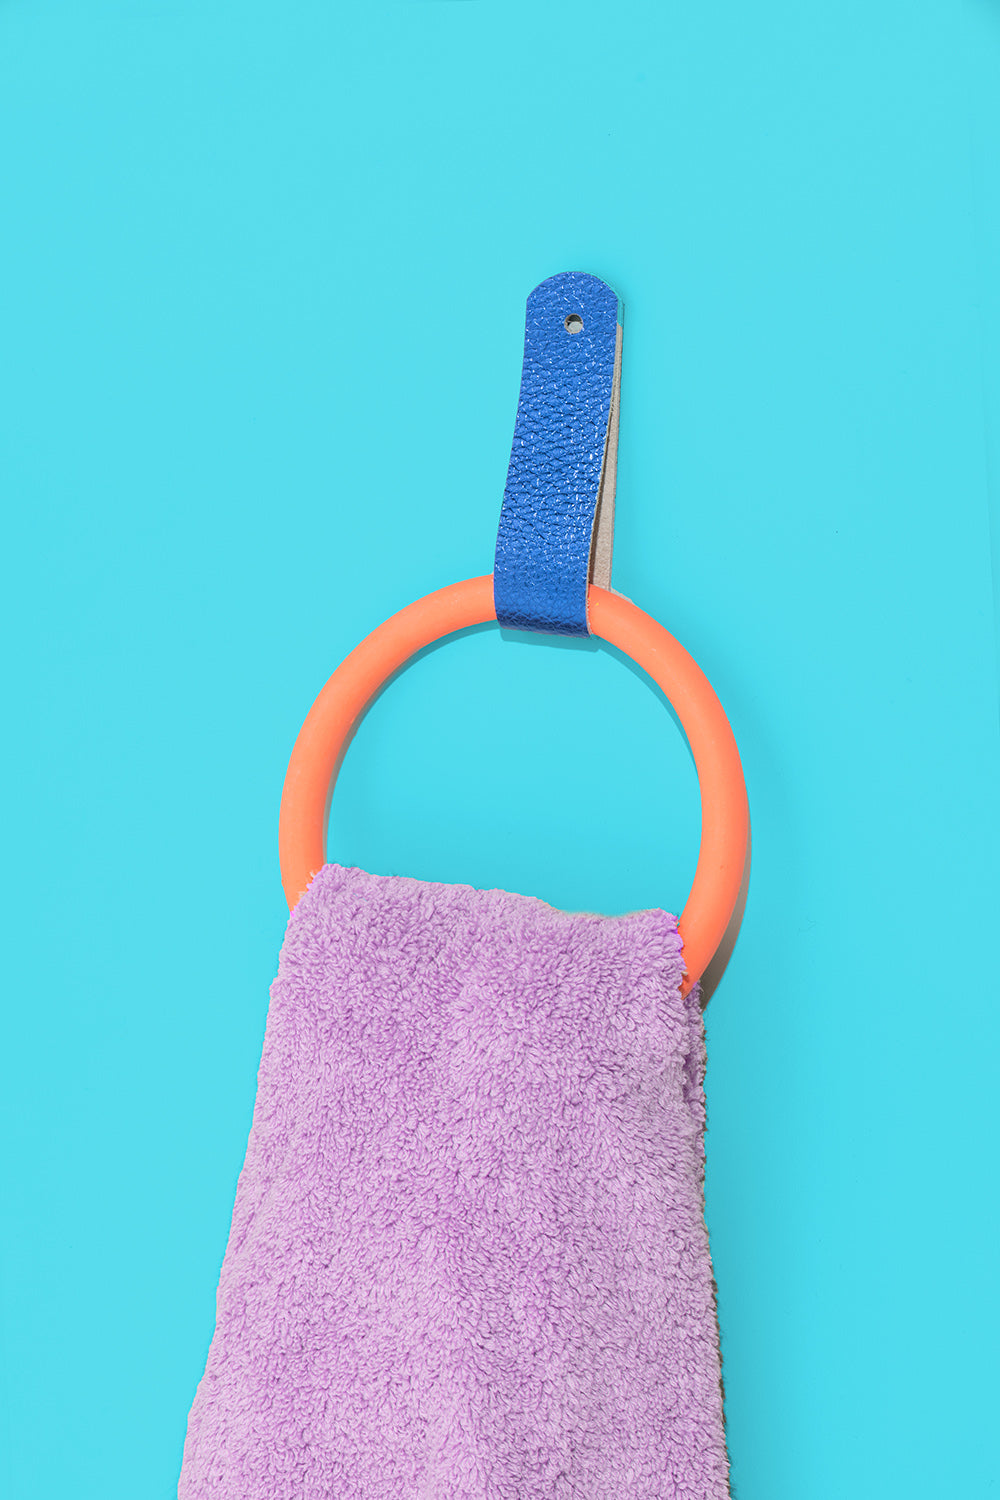 Towel Ring & Leather Strap - Orange Block Colour - Misshandled